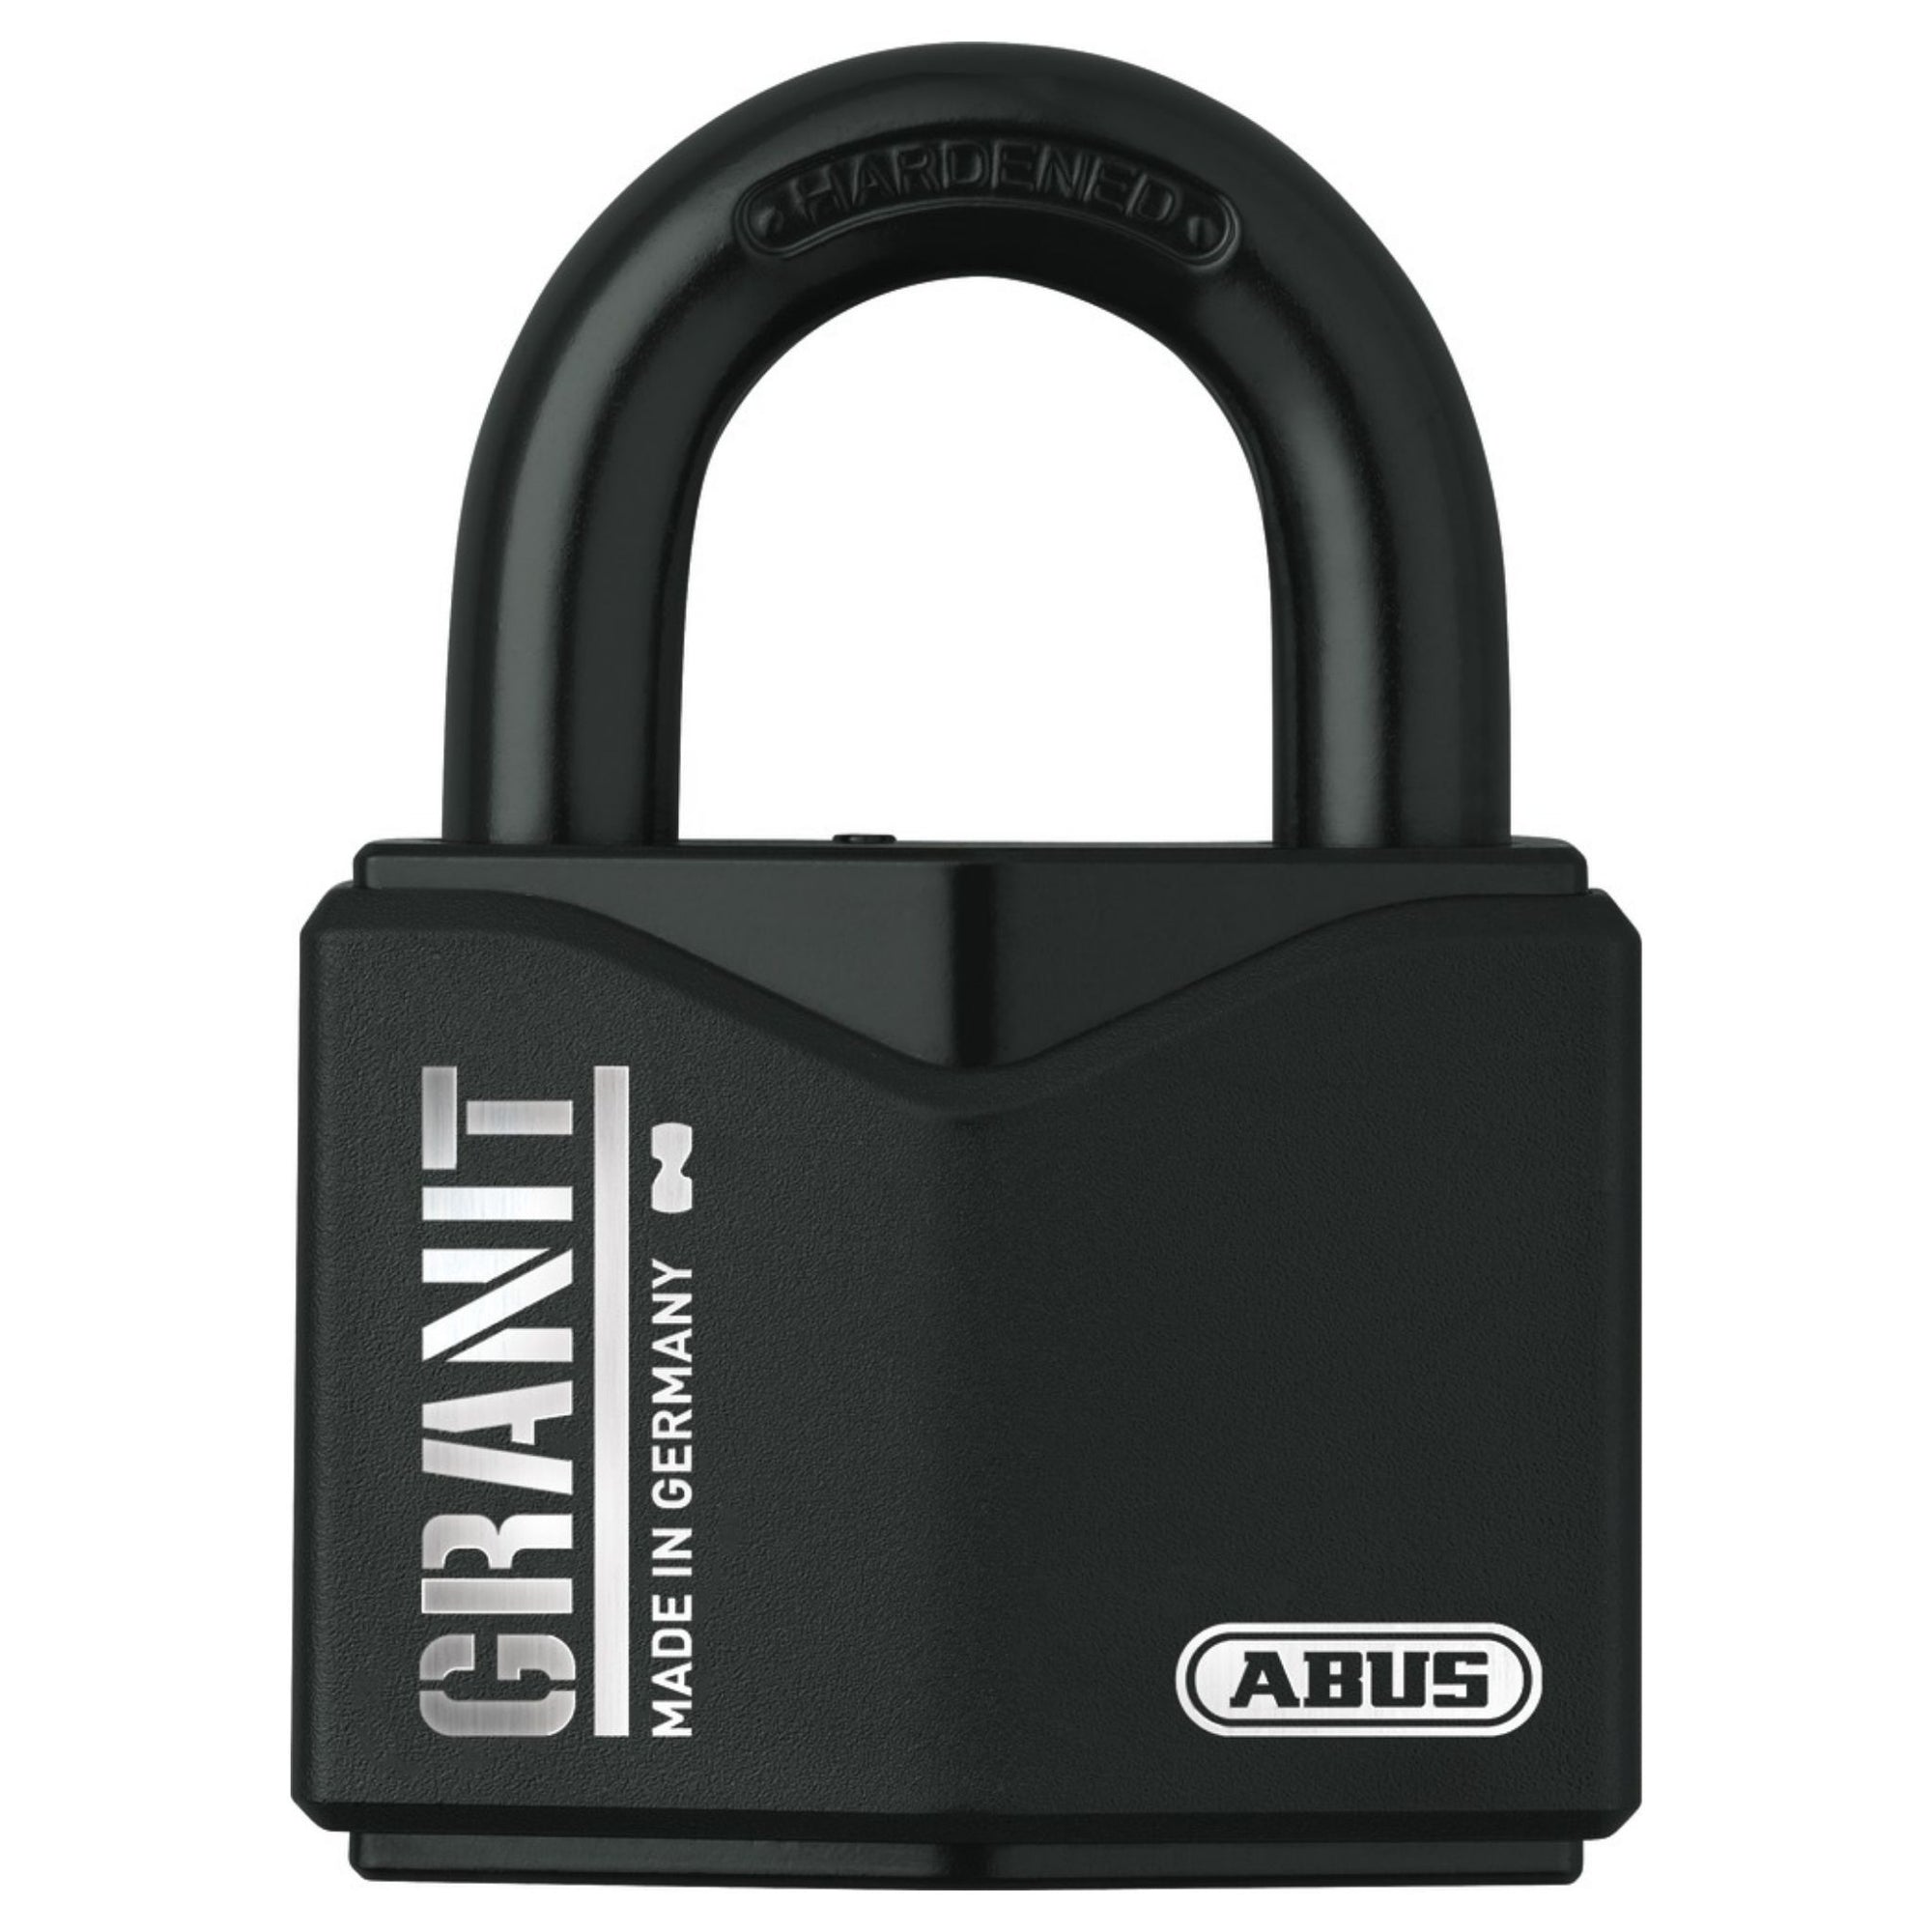 Abus 37RK/55 KA 6455645 Granit Lock Keyed Alike Black Granite Padlocks Matched to Existing Key# KA6455645 - The Lock Source